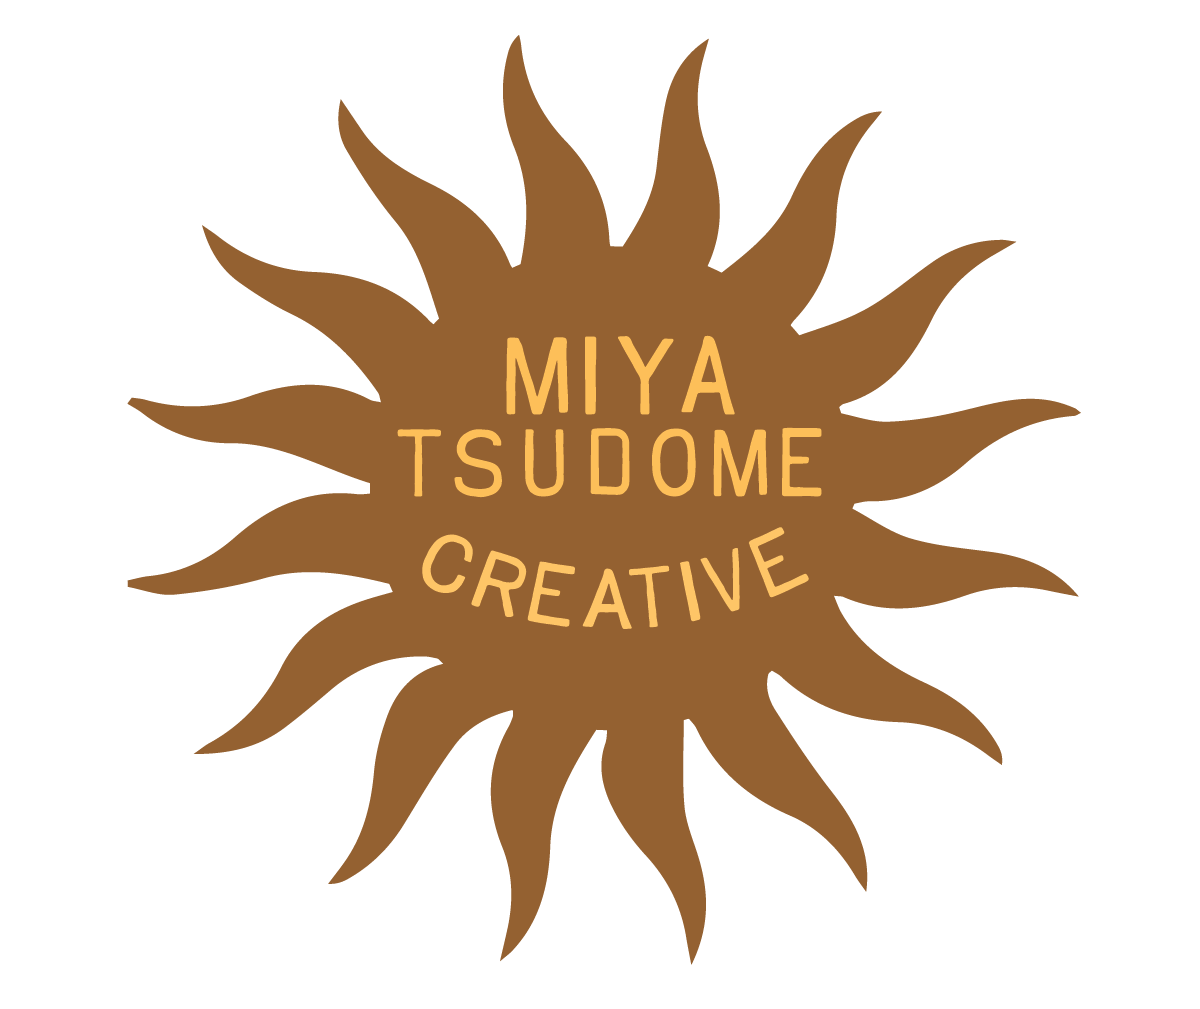 MIYA TSUDOME